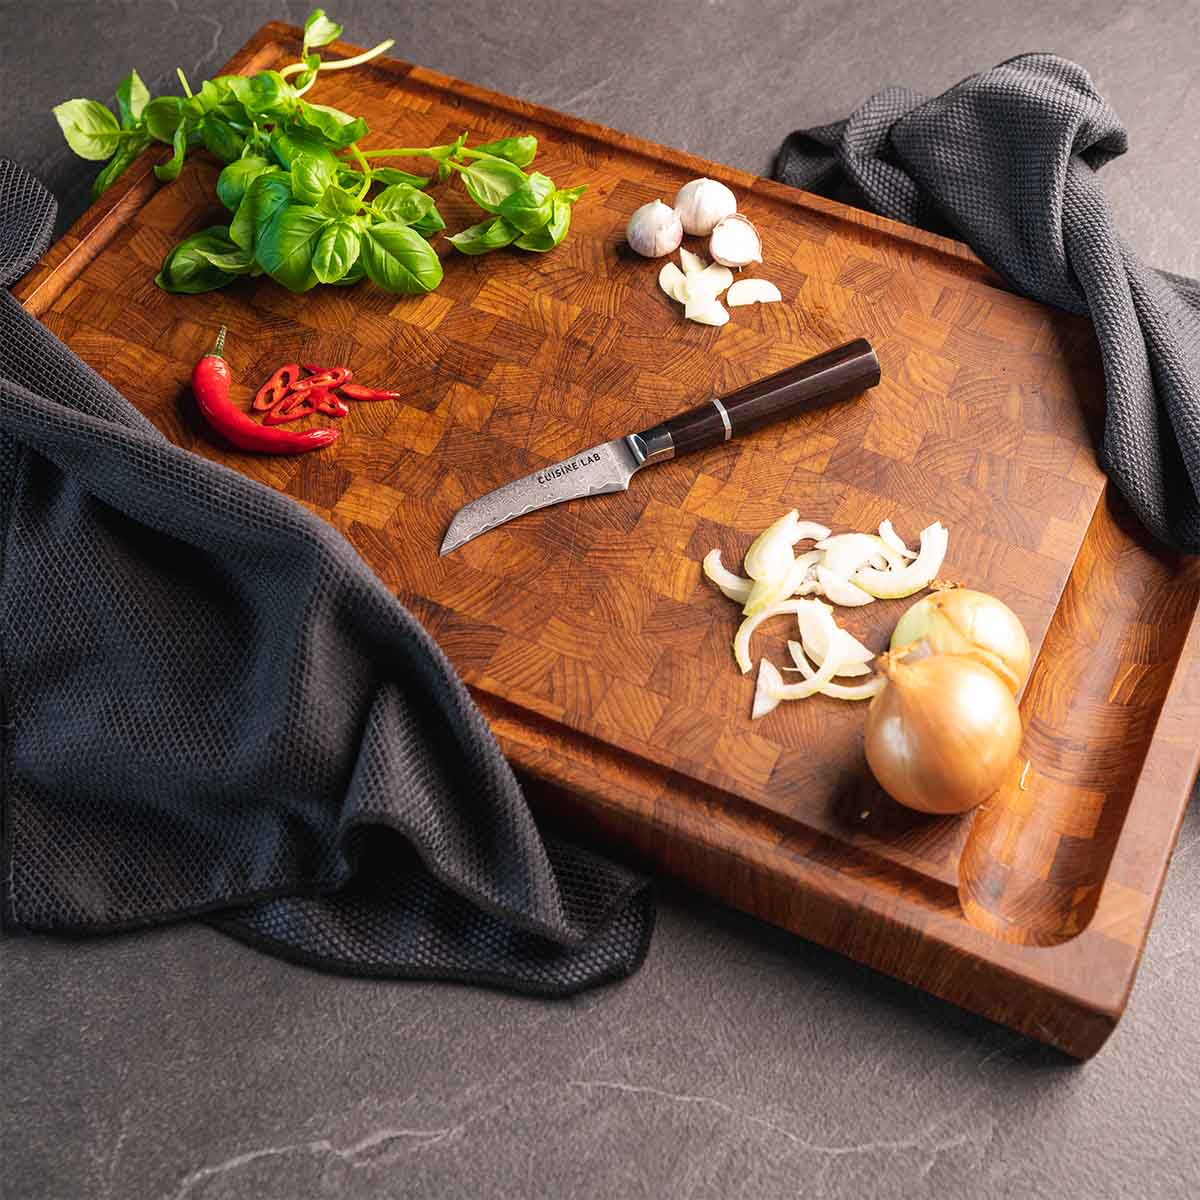 Legacy Urtekniv - 90 mm. - Kitchen Knives - cuisinelab